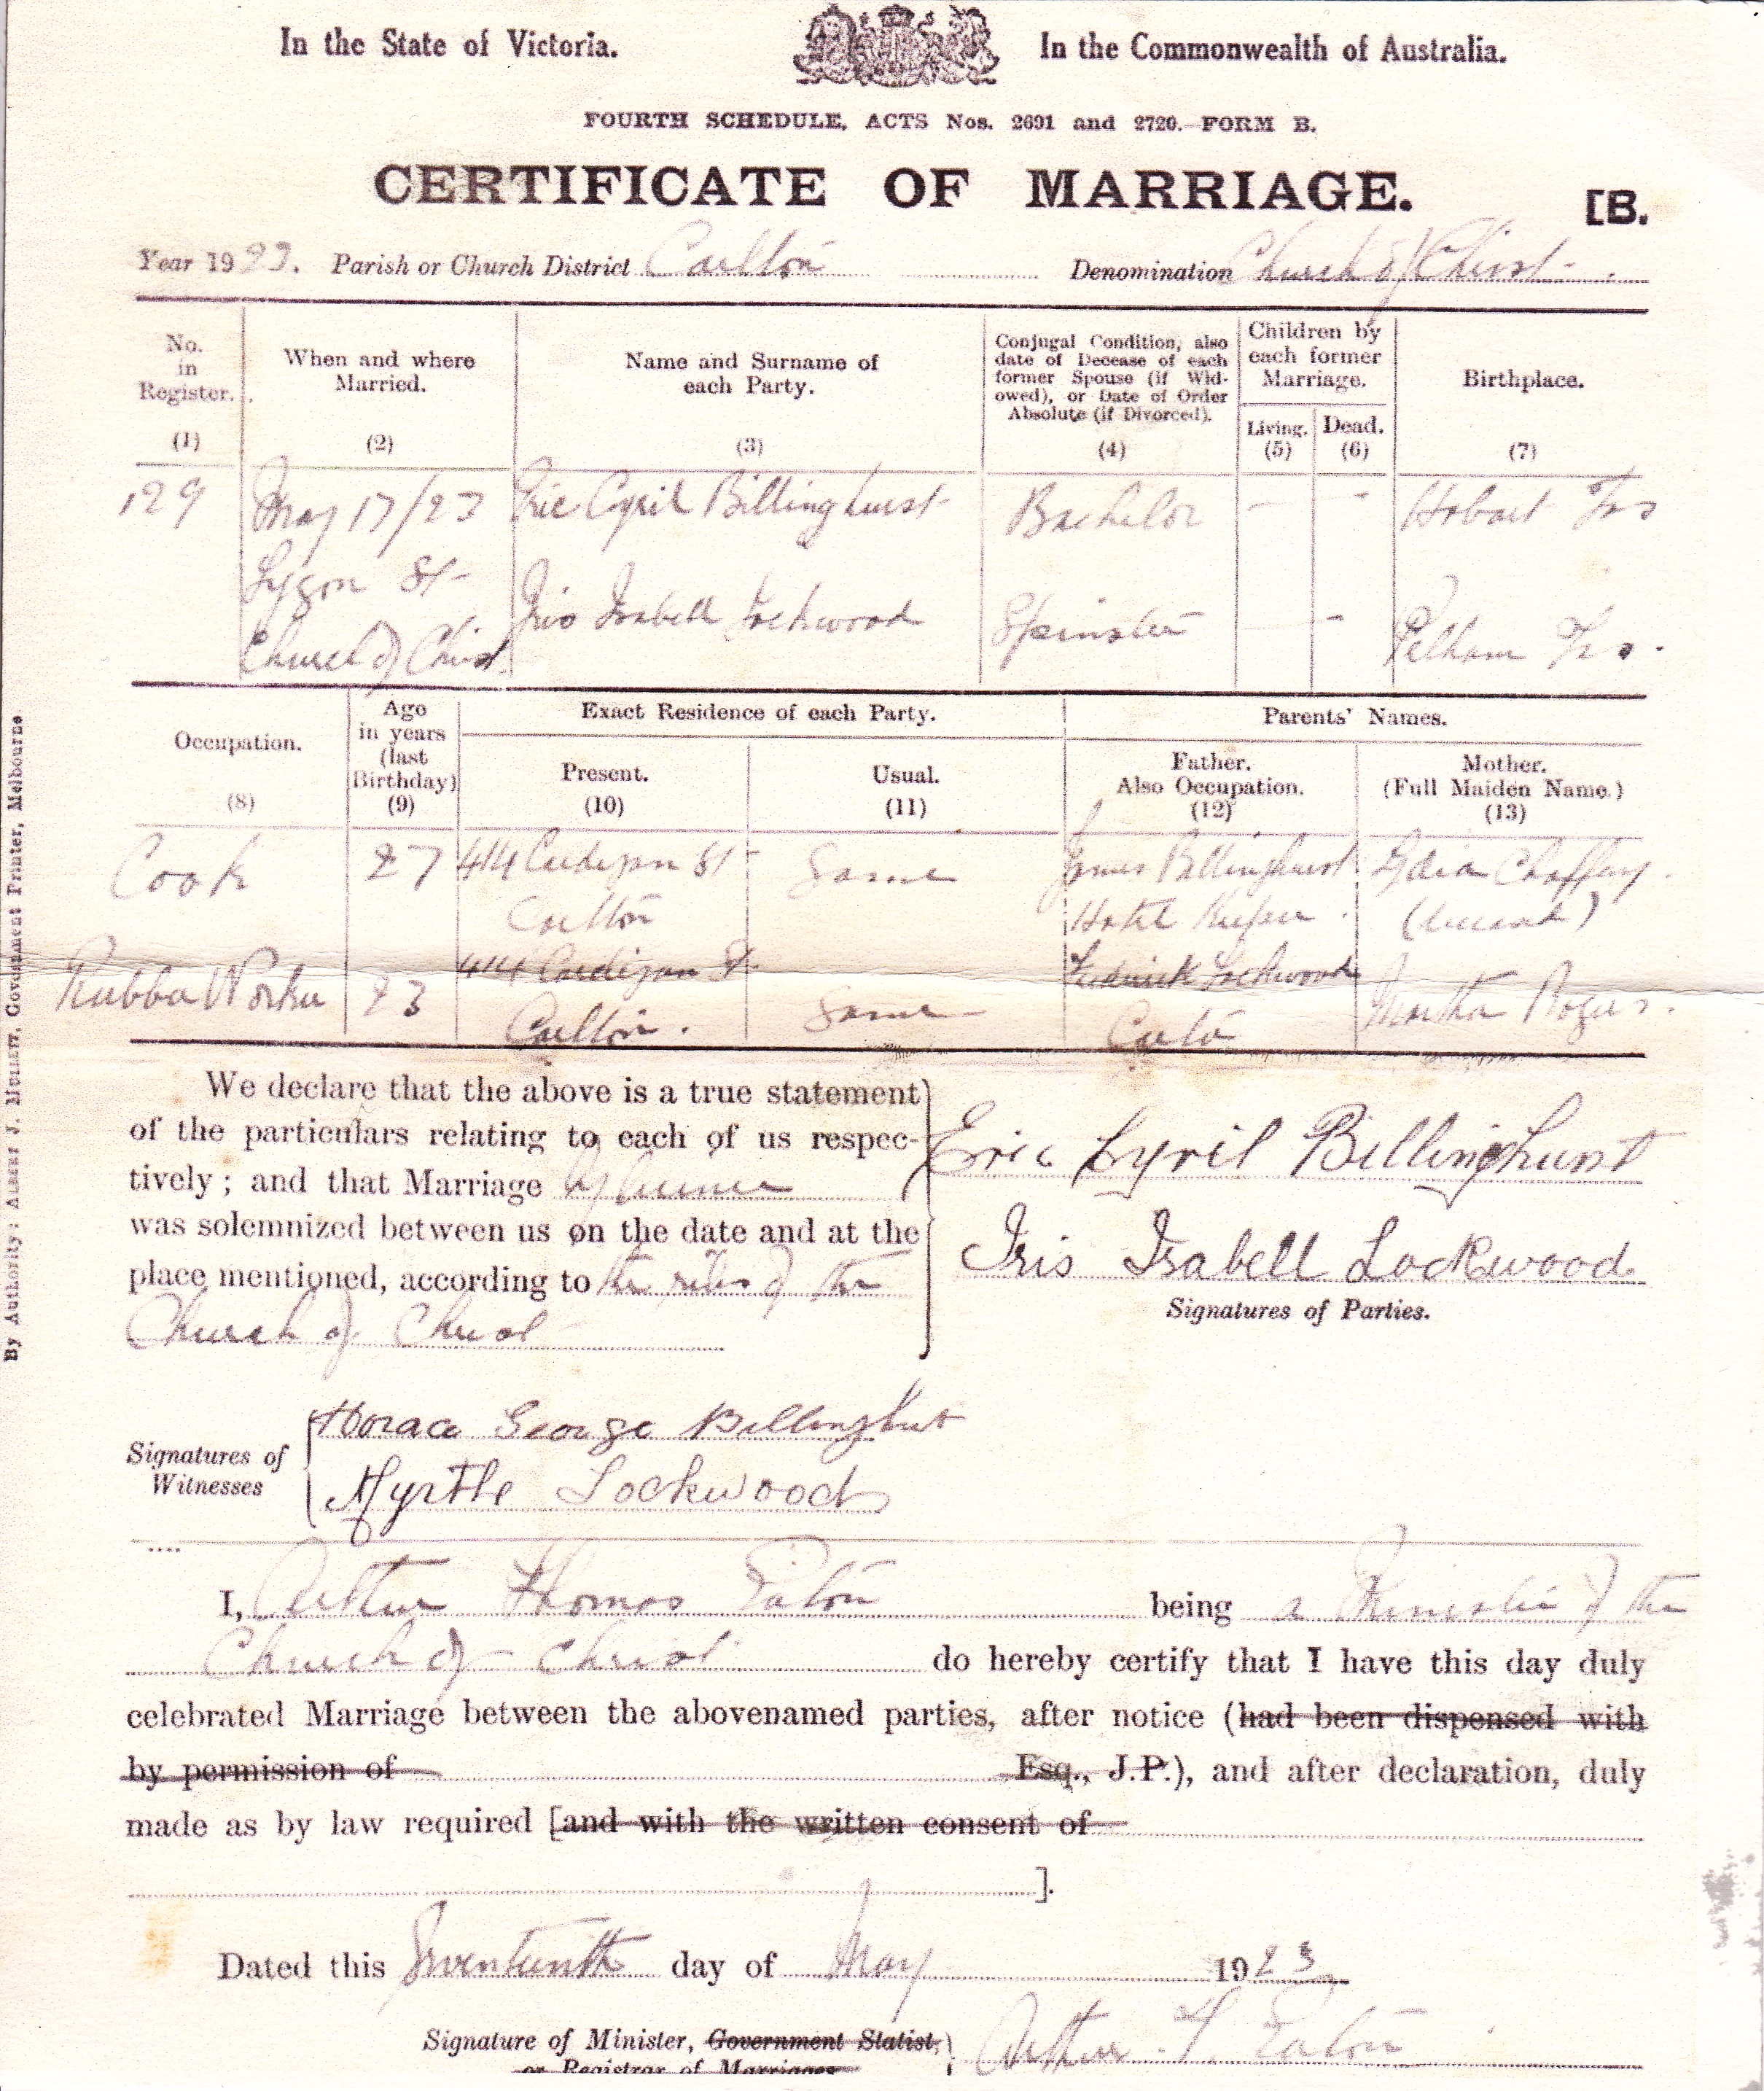 Eric Cyril Billinghurst marriage certificate